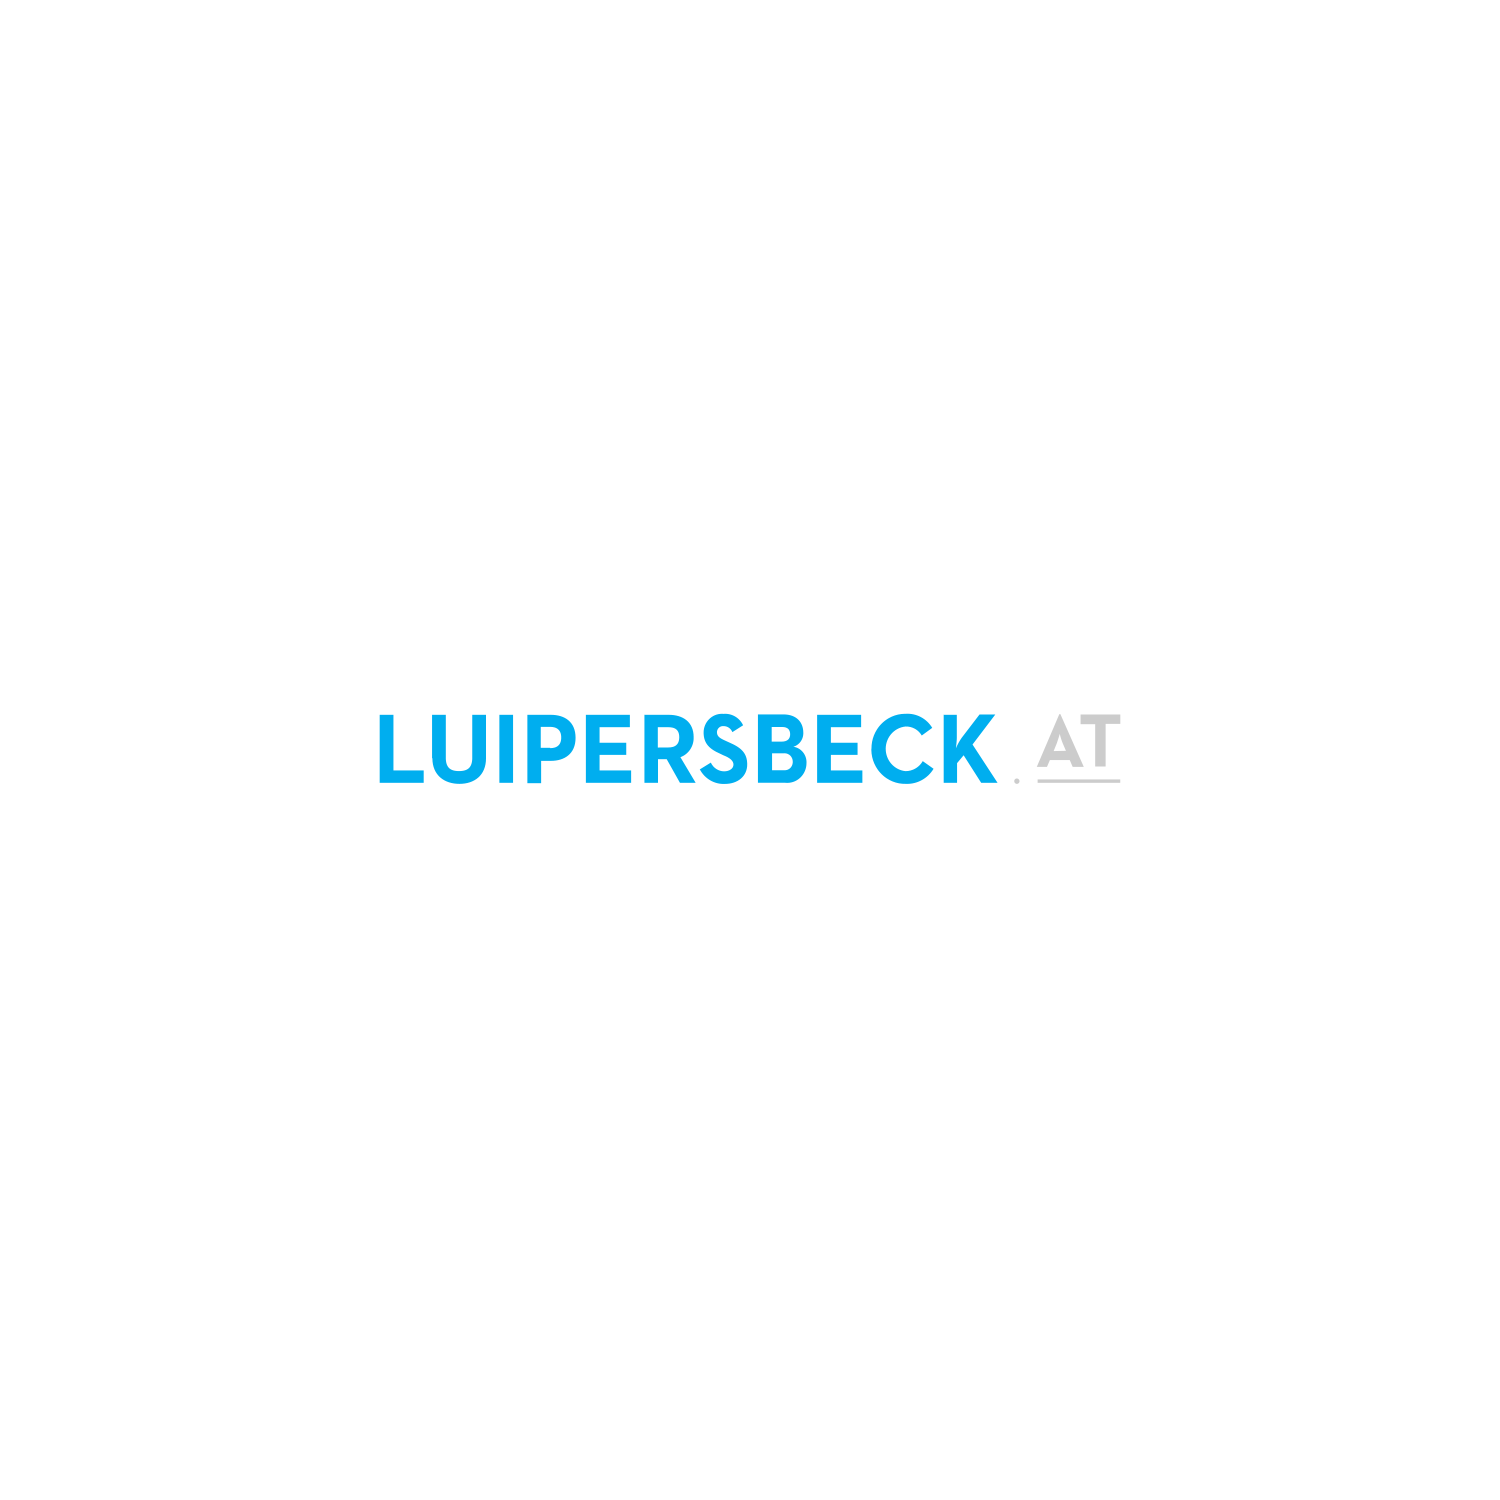 (c) Luipersbeck.at